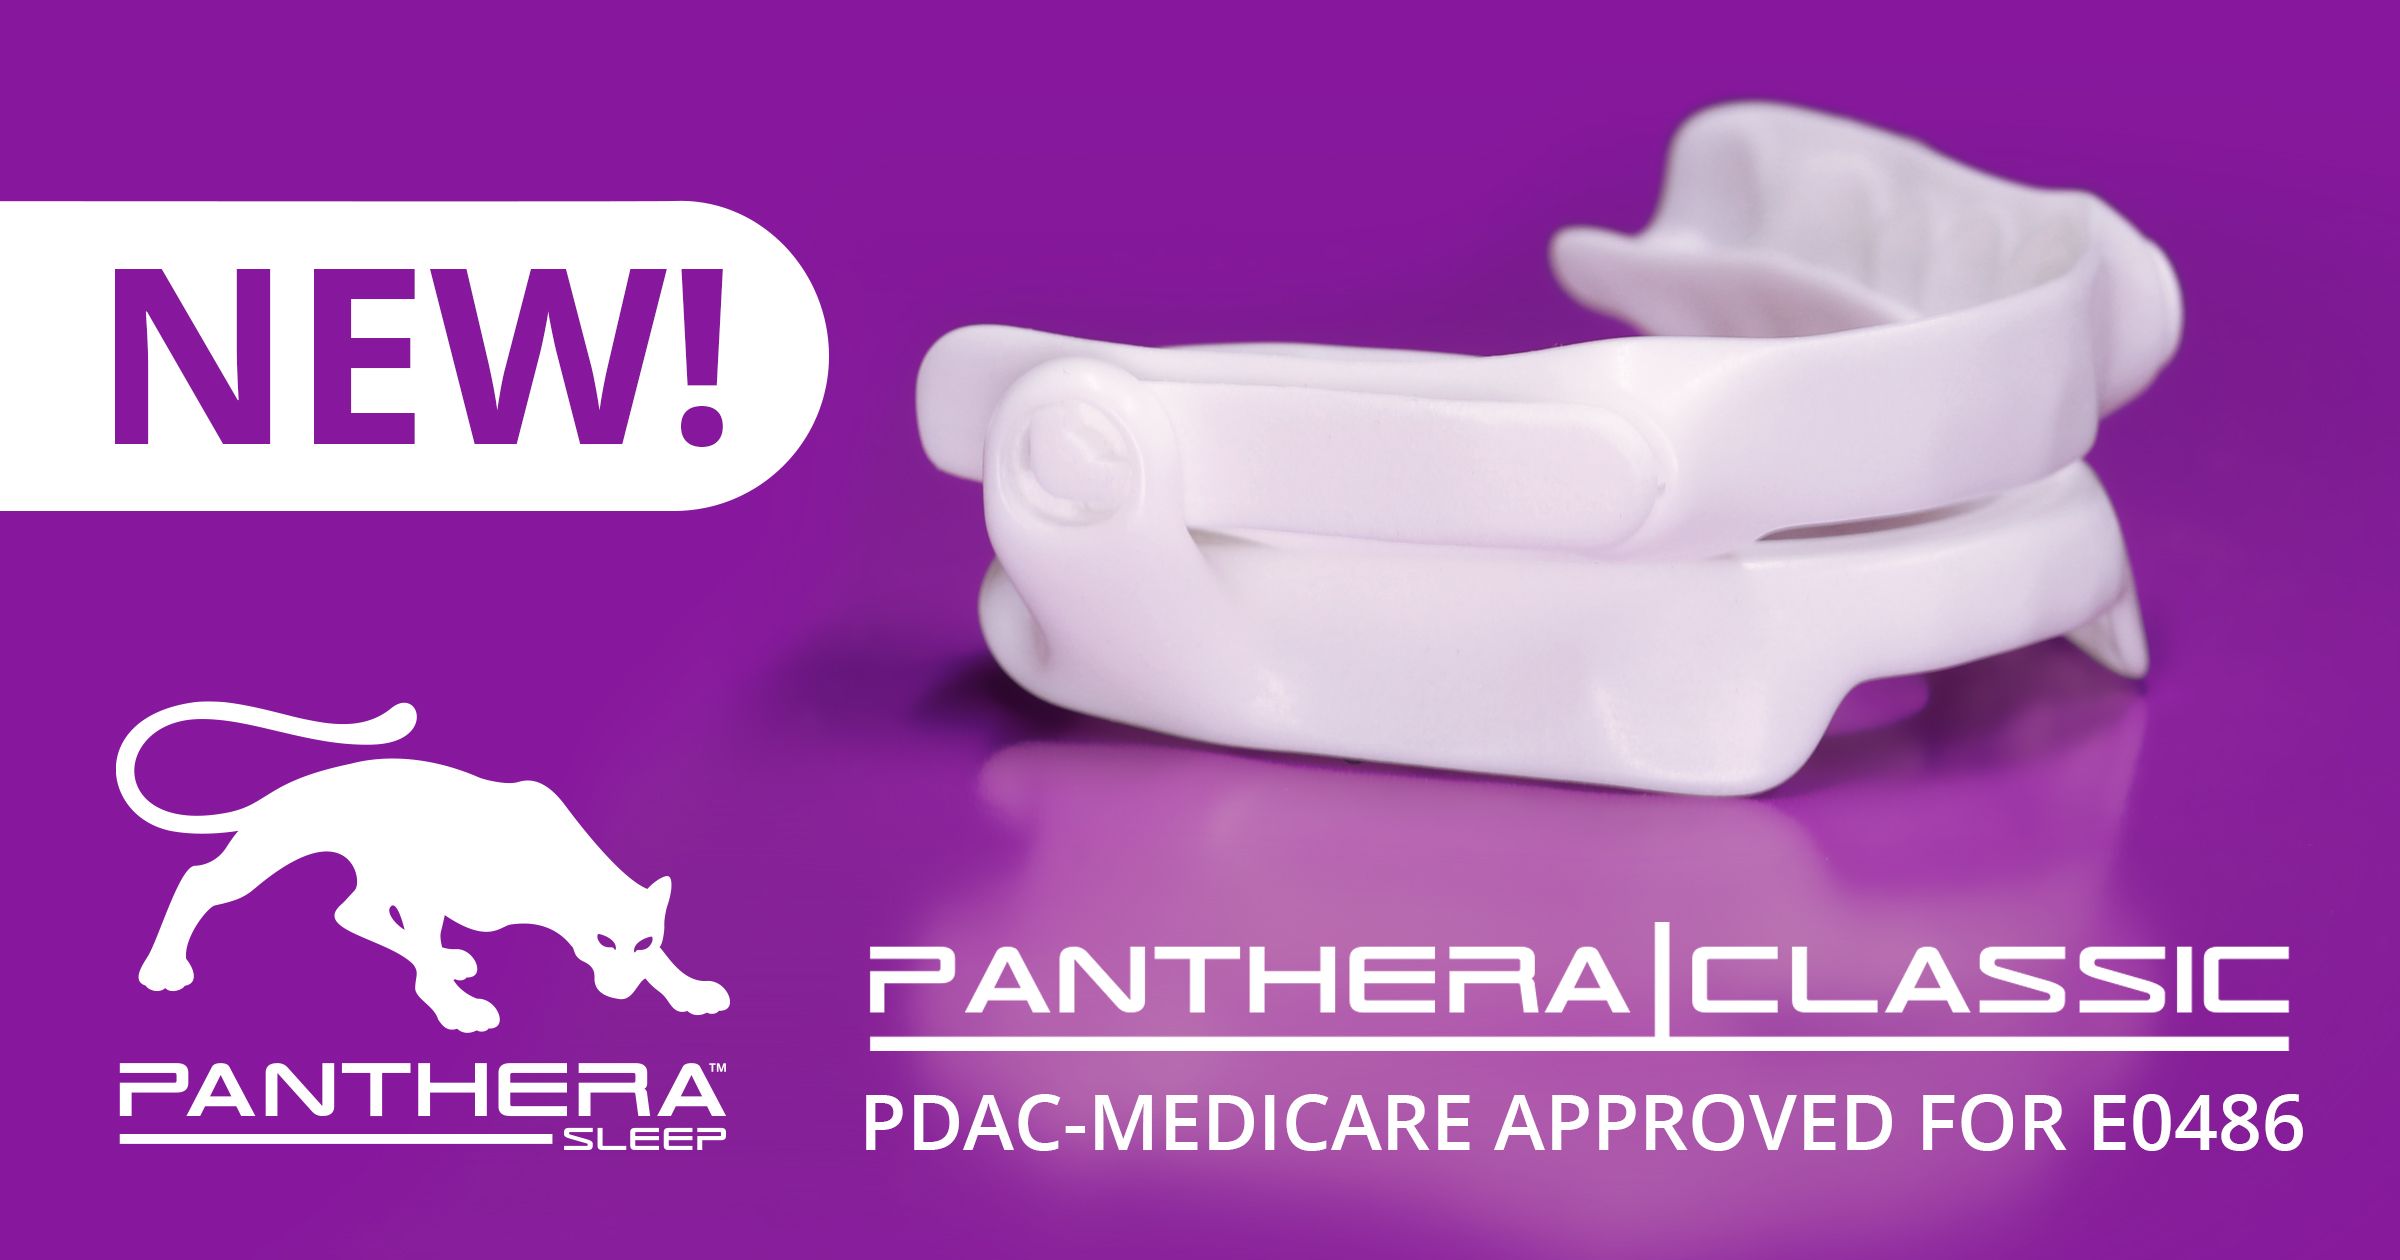 Panthera Dental products